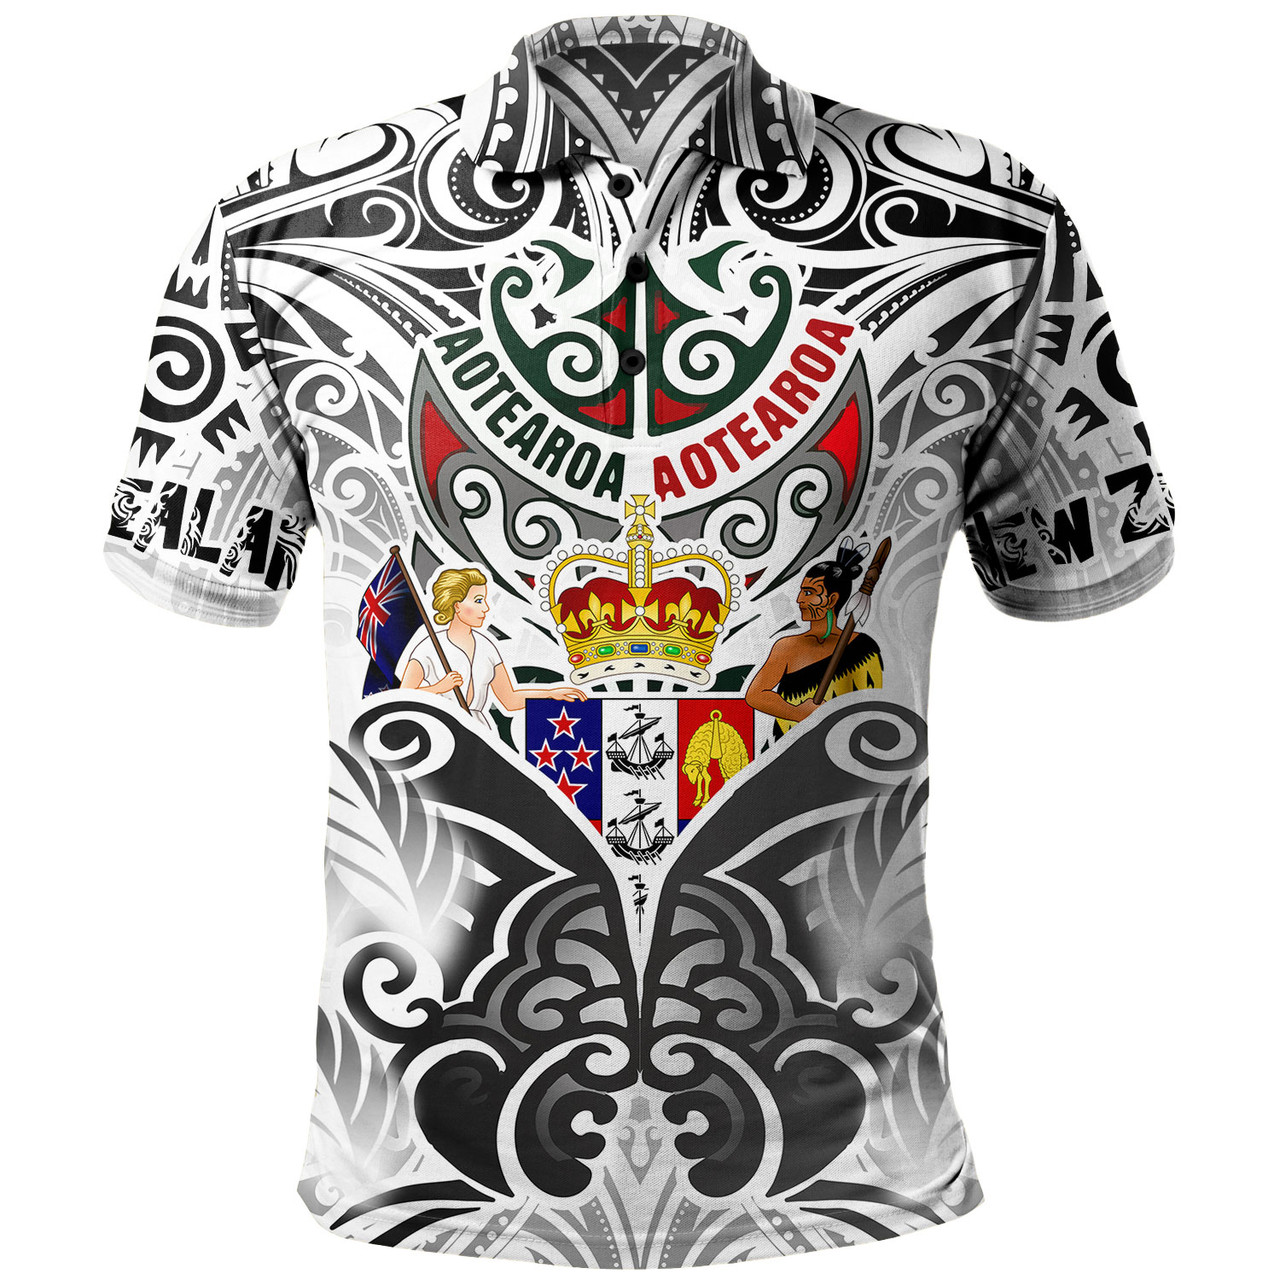 New Zealand Aotearoa Polo Shirt Maori Traditional Hongi - The Breath Of Life Coat Of Arms Tribal Patterns